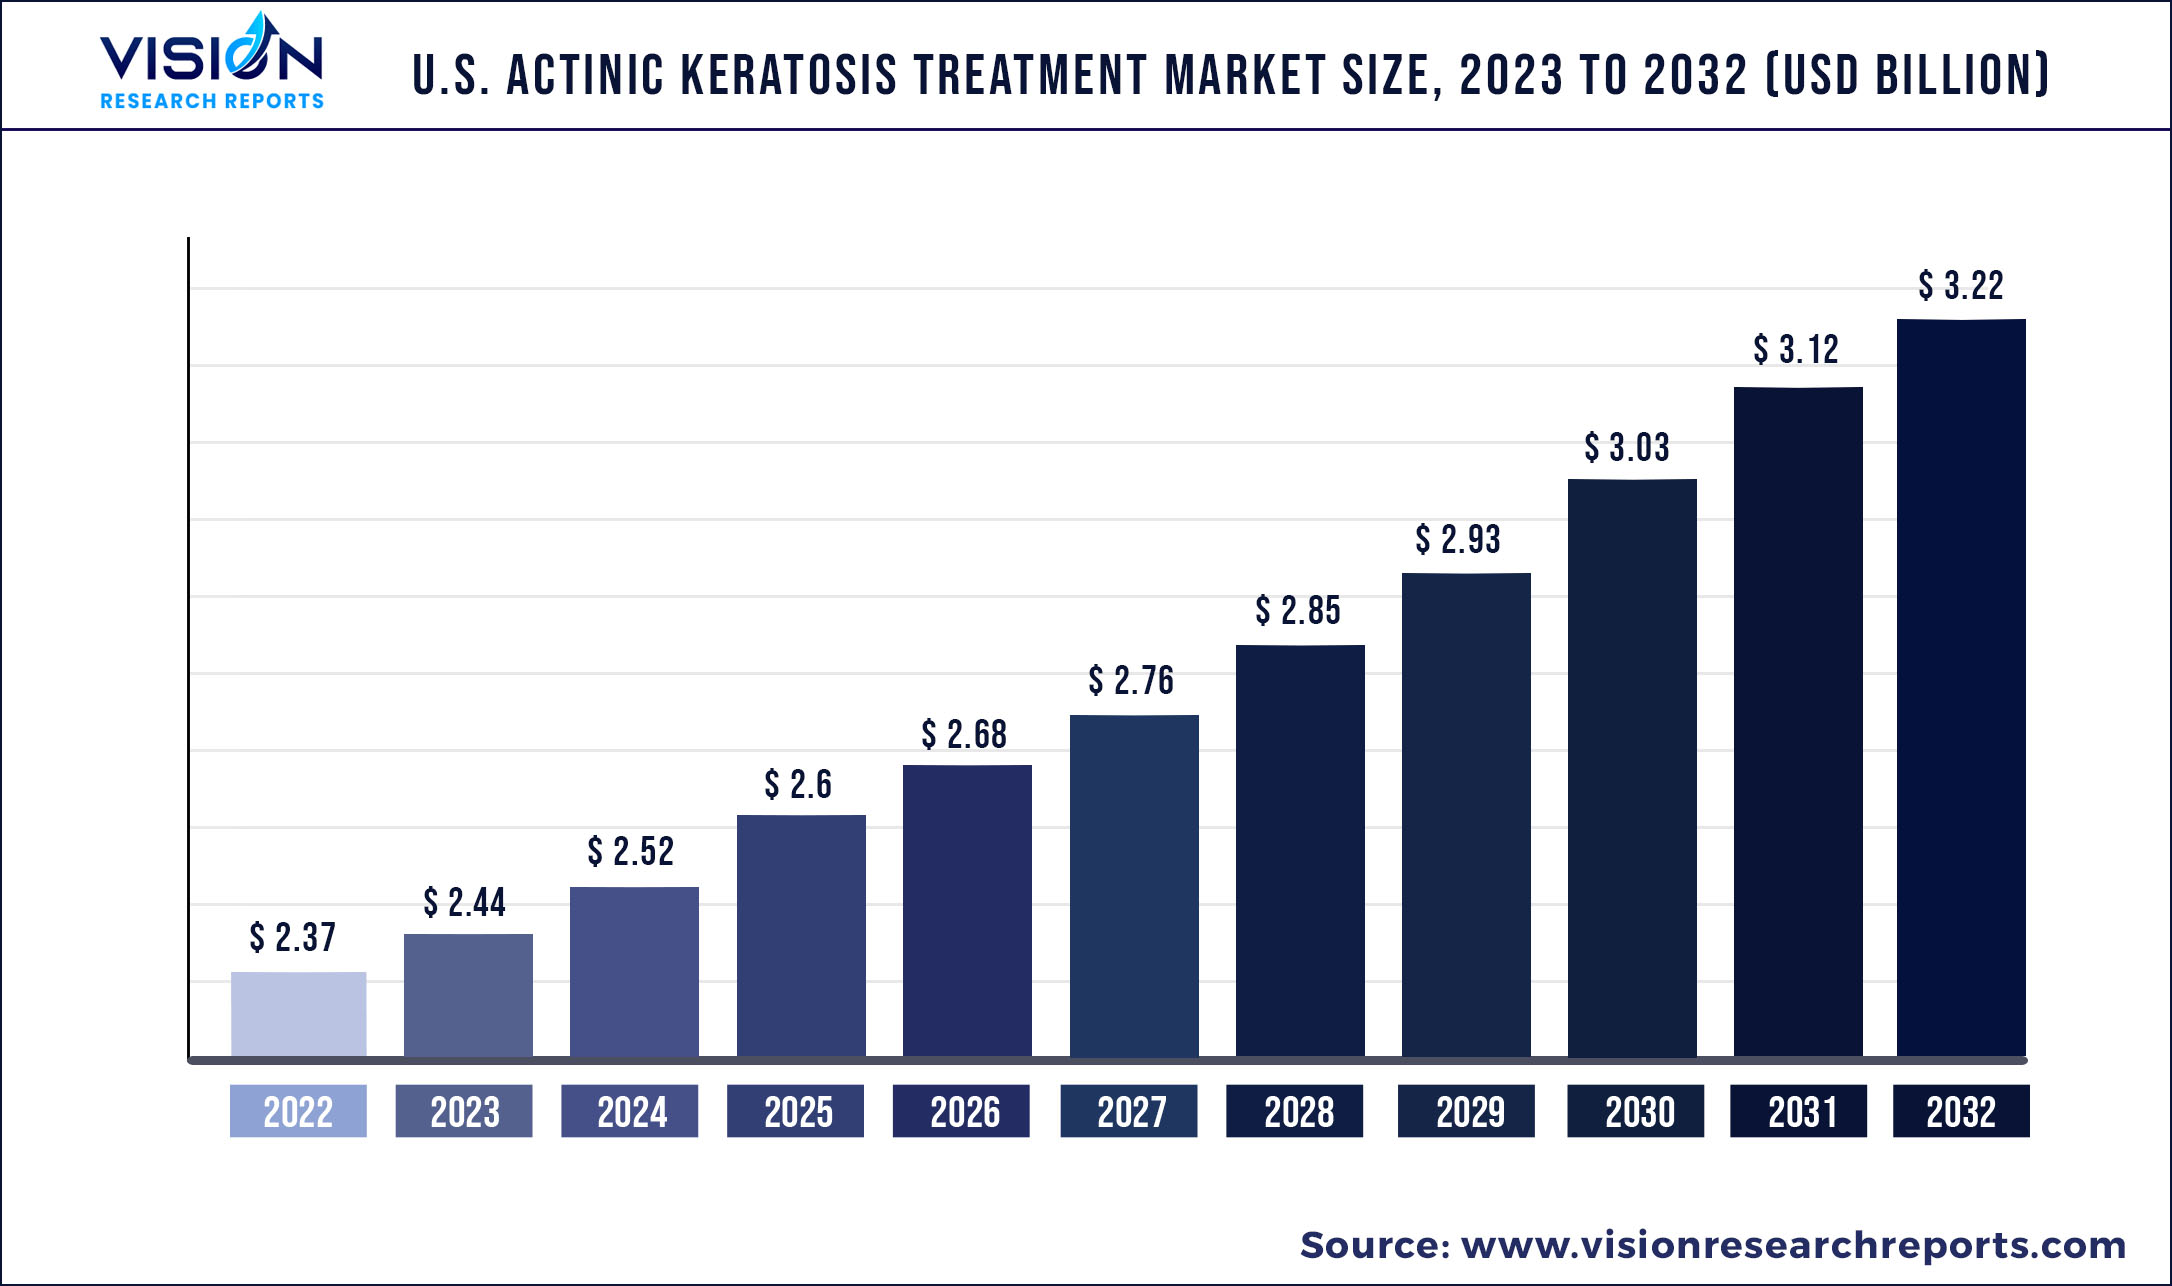 U.S. Actinic Keratosis Treatment Market Size 2023 to 2032